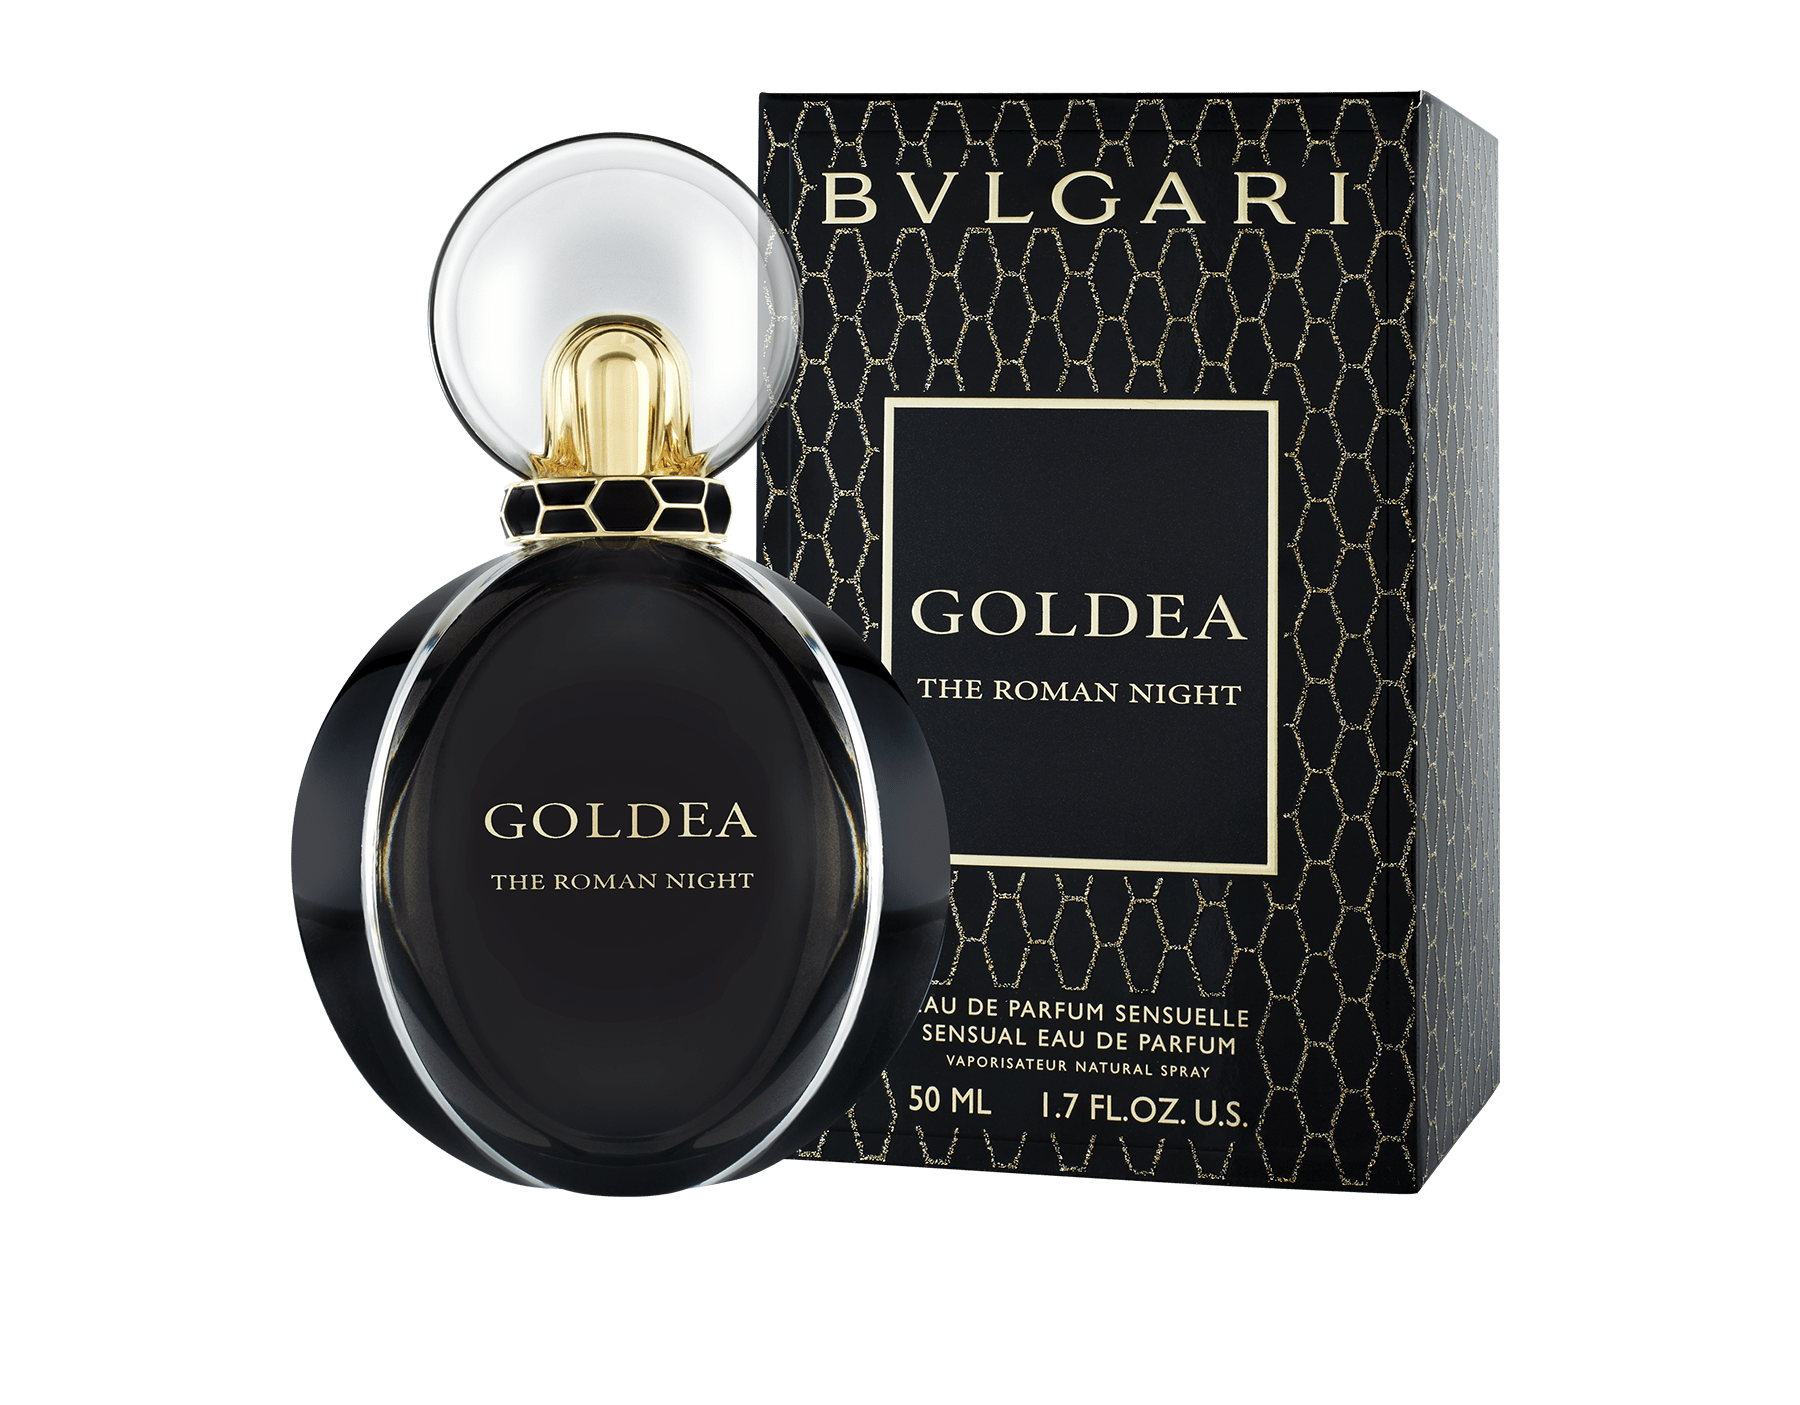 bvlgari goldea new perfume